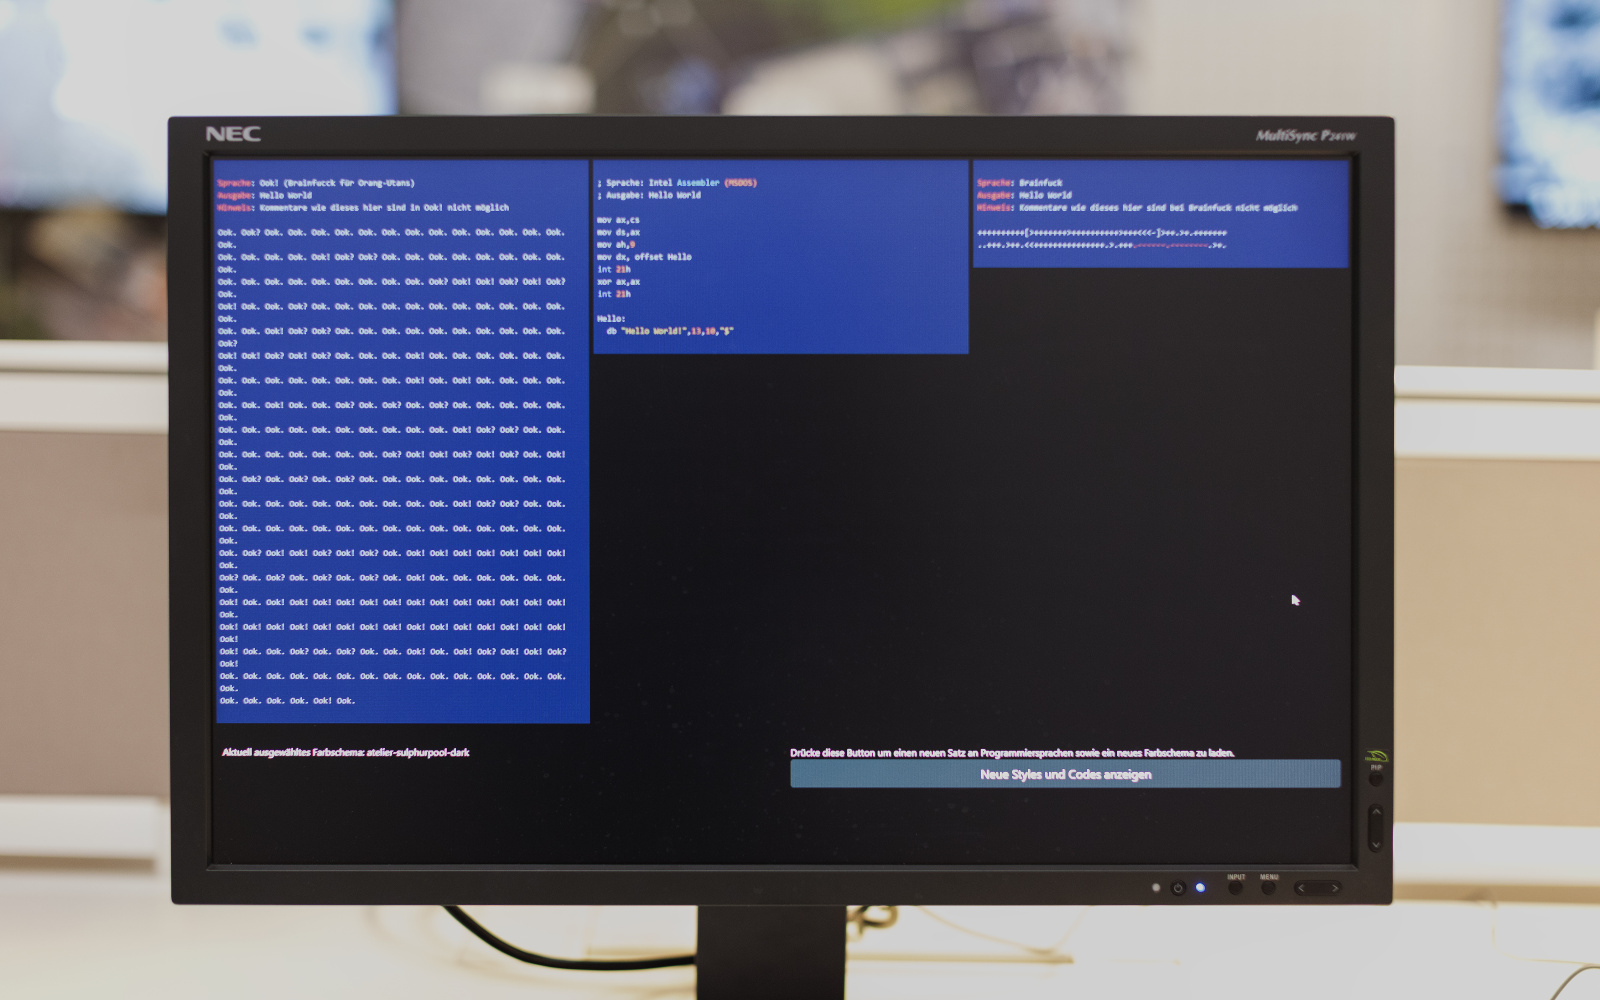 Black screen showing a programming code.